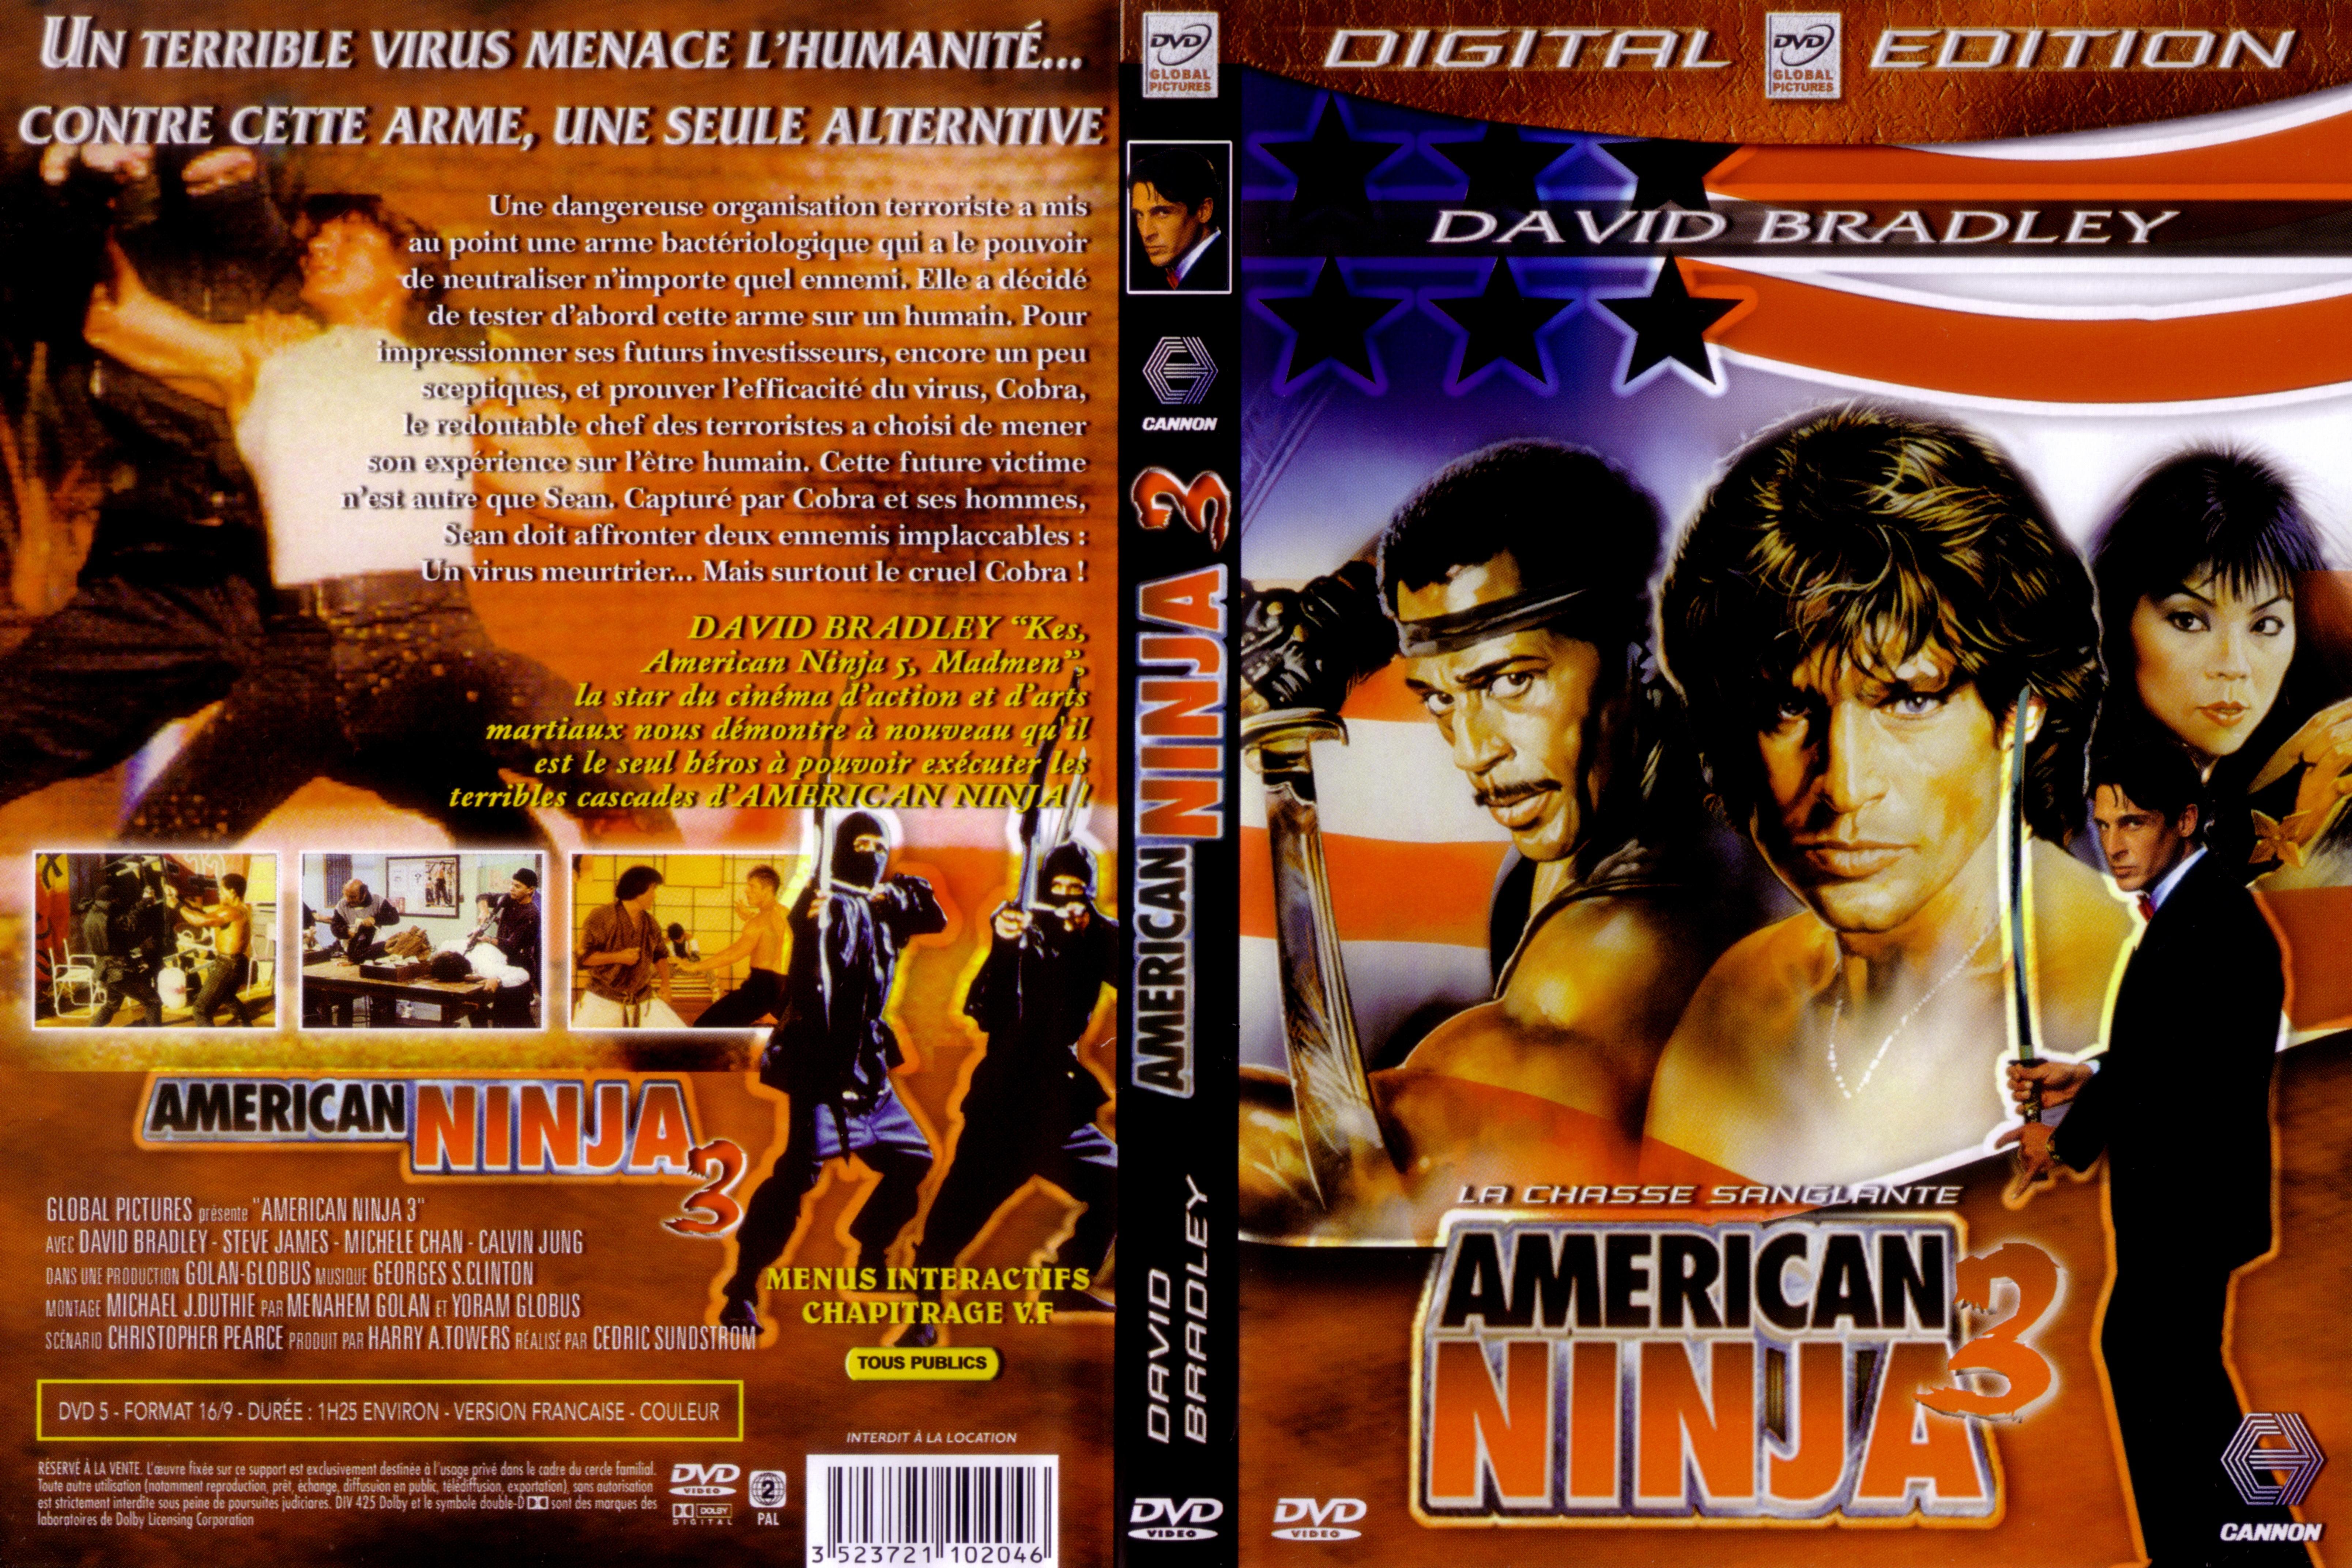 Jaquette DVD American ninja 3